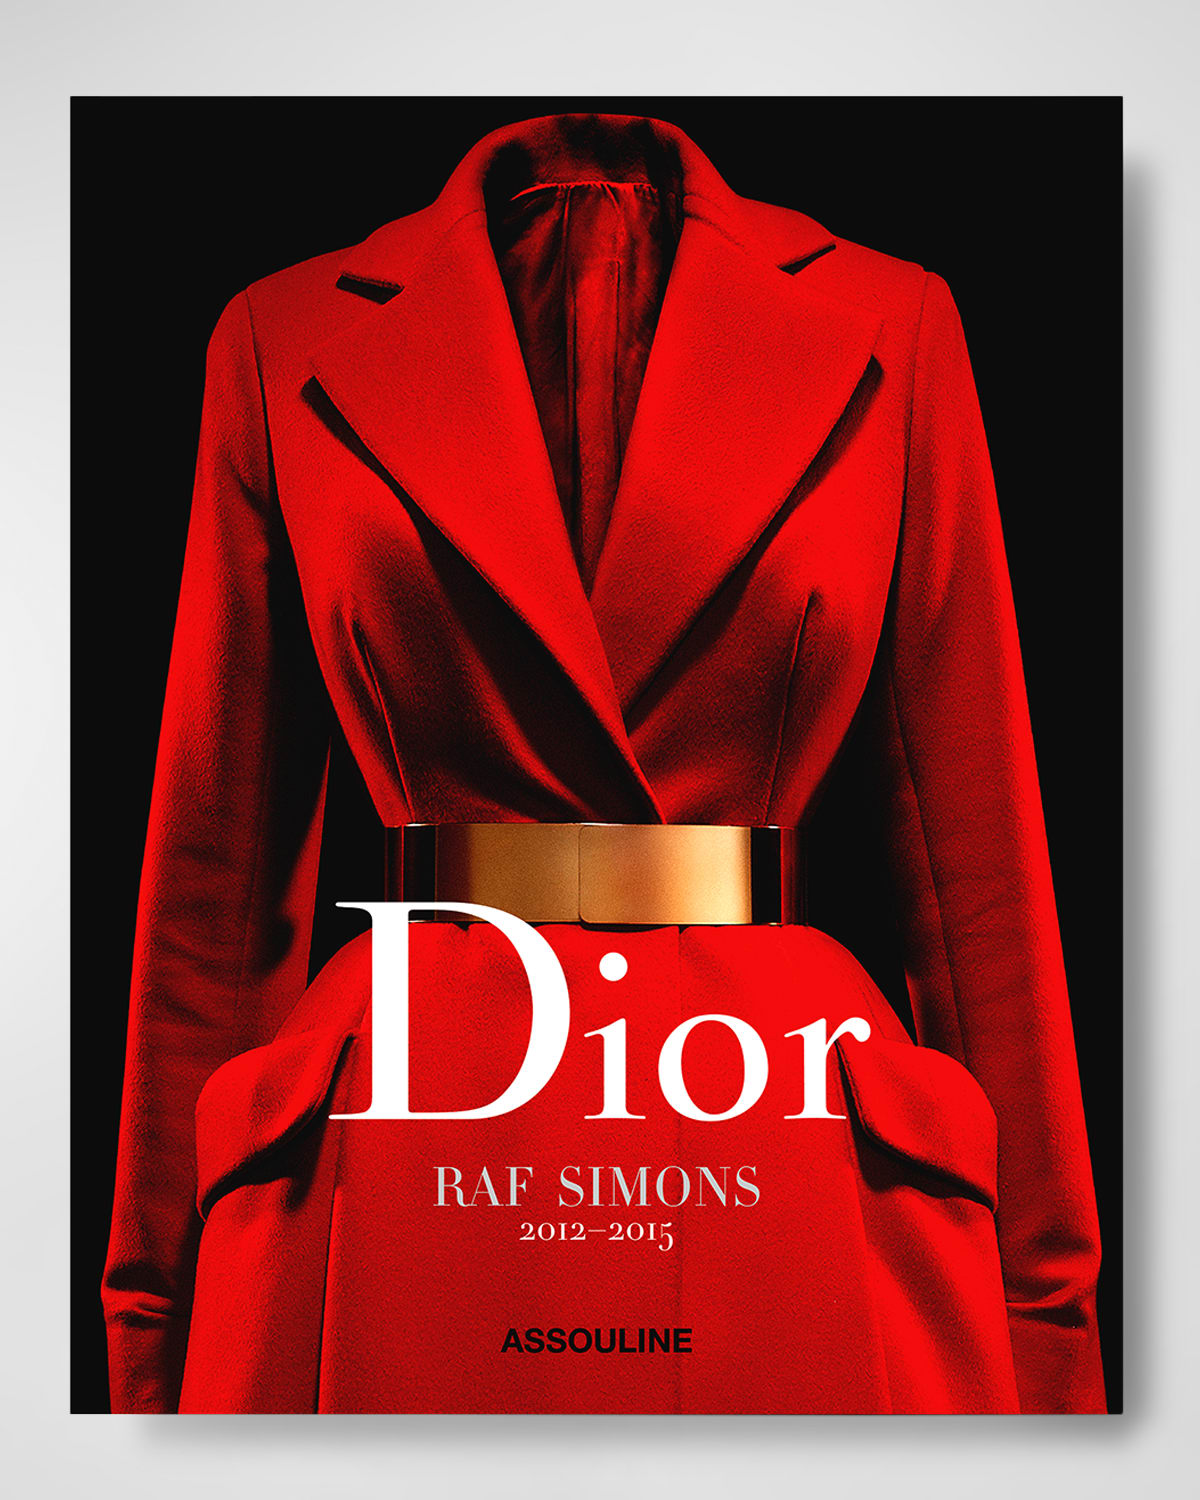 "Dior by Raf Simons (2012-2015)" Book by Tim Blanks